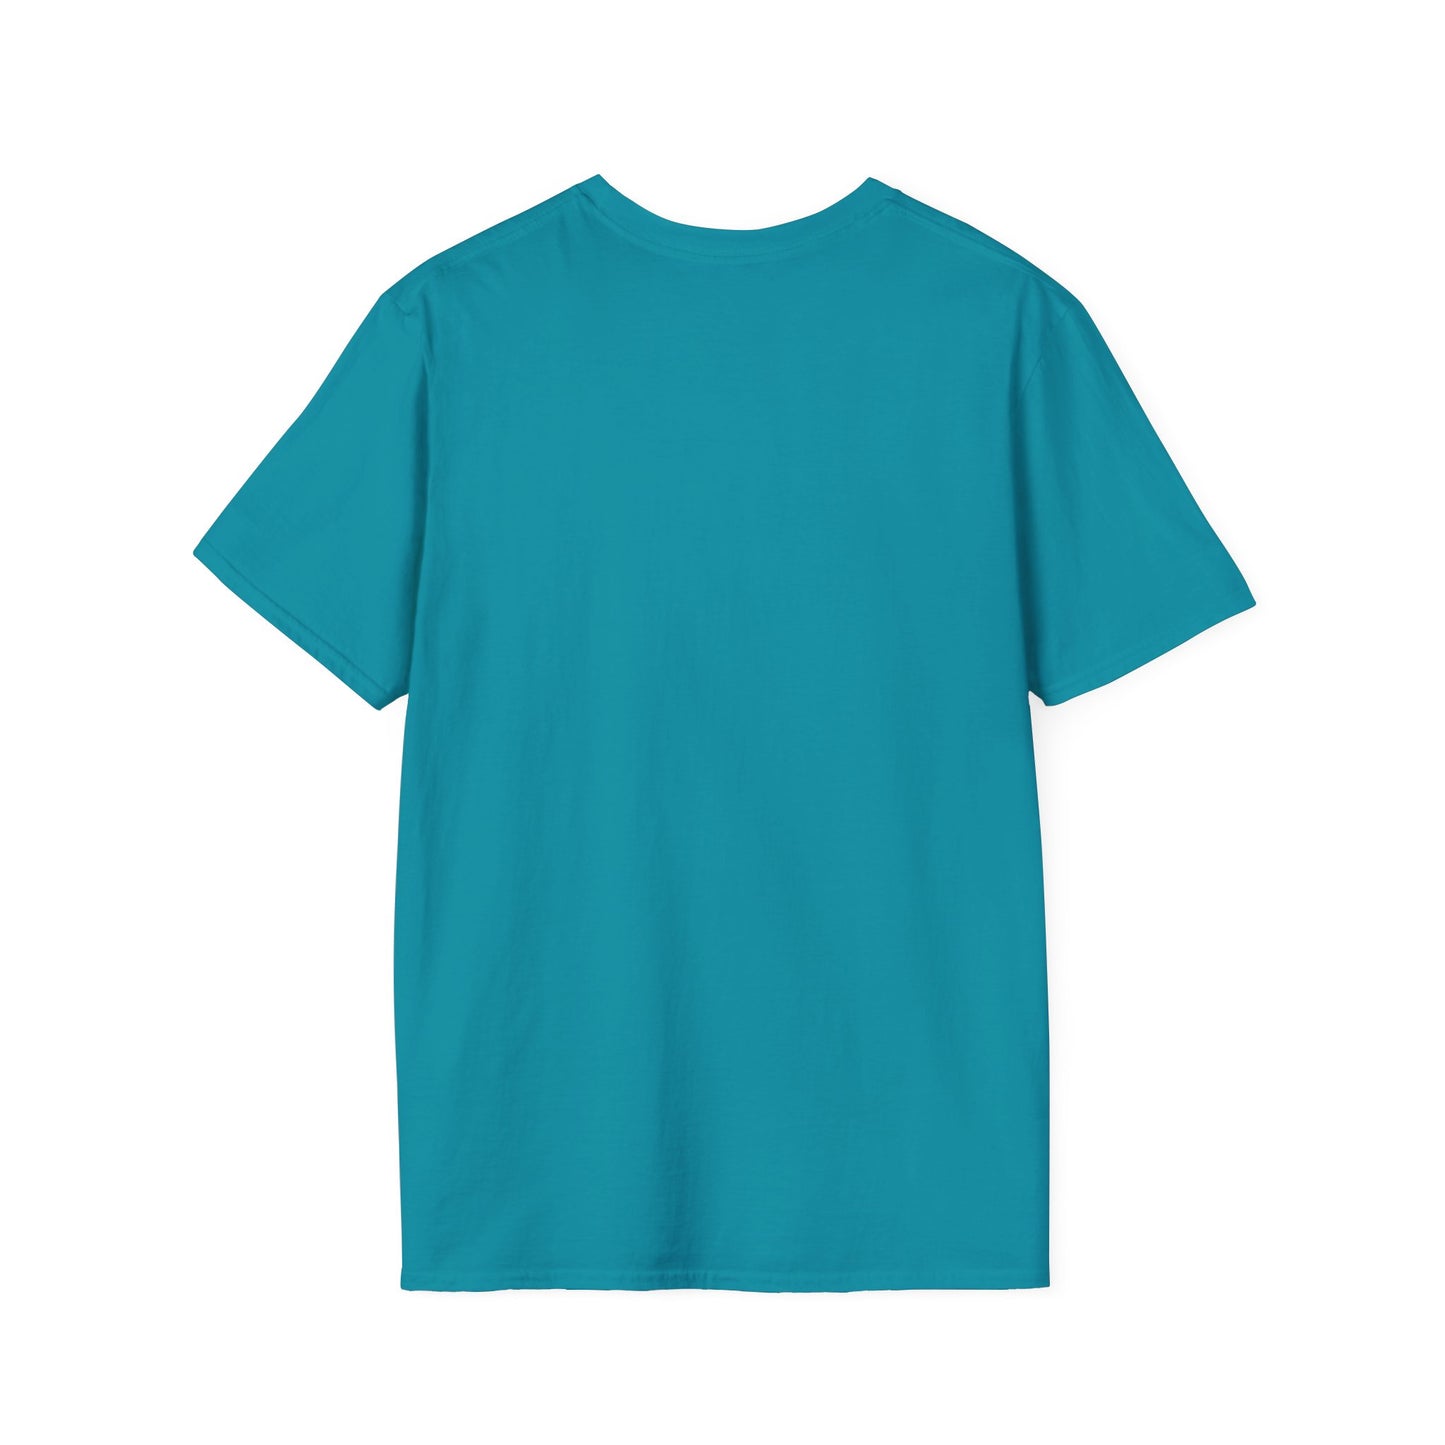 Color Splatter T-Shirt - Raging Skeleton Playing video games - Color Splatter Style T-Shirt